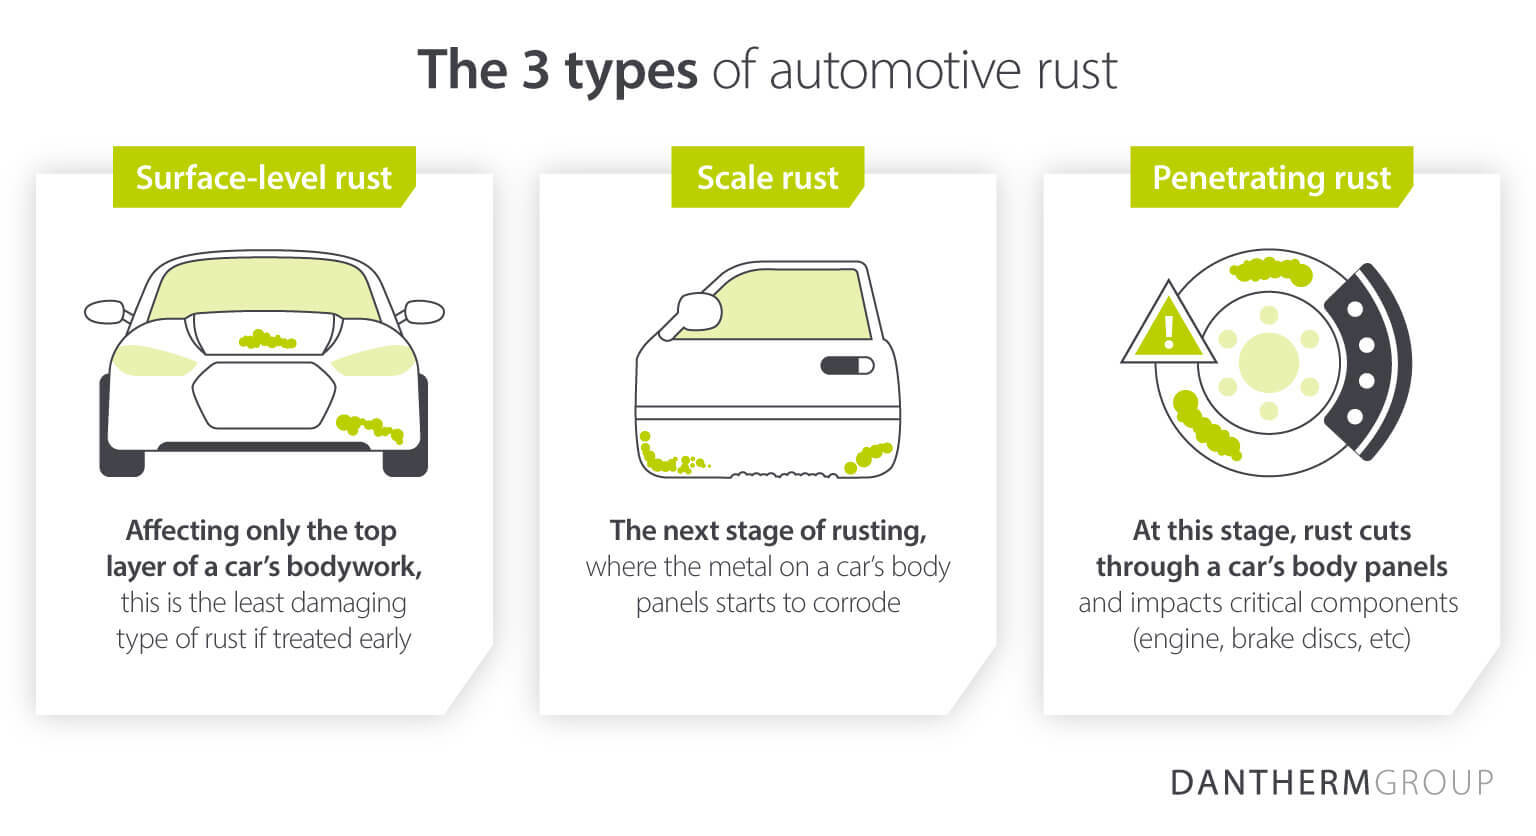 3 types of automotive rust